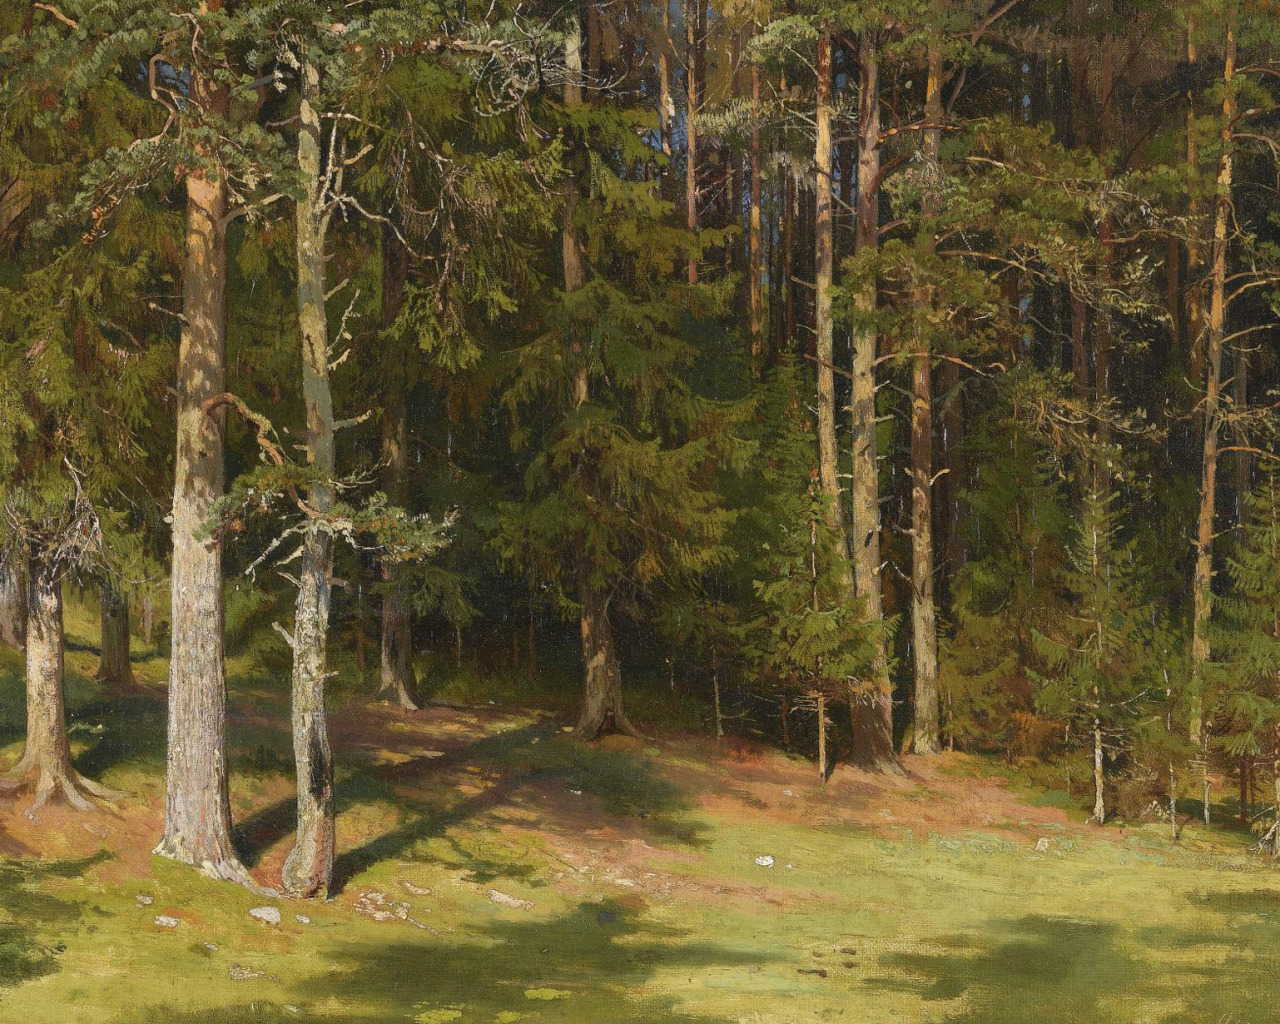 Forest clearing. Картина Шишкина опушка леса 1890 год. Три сосны картина Шишкина.